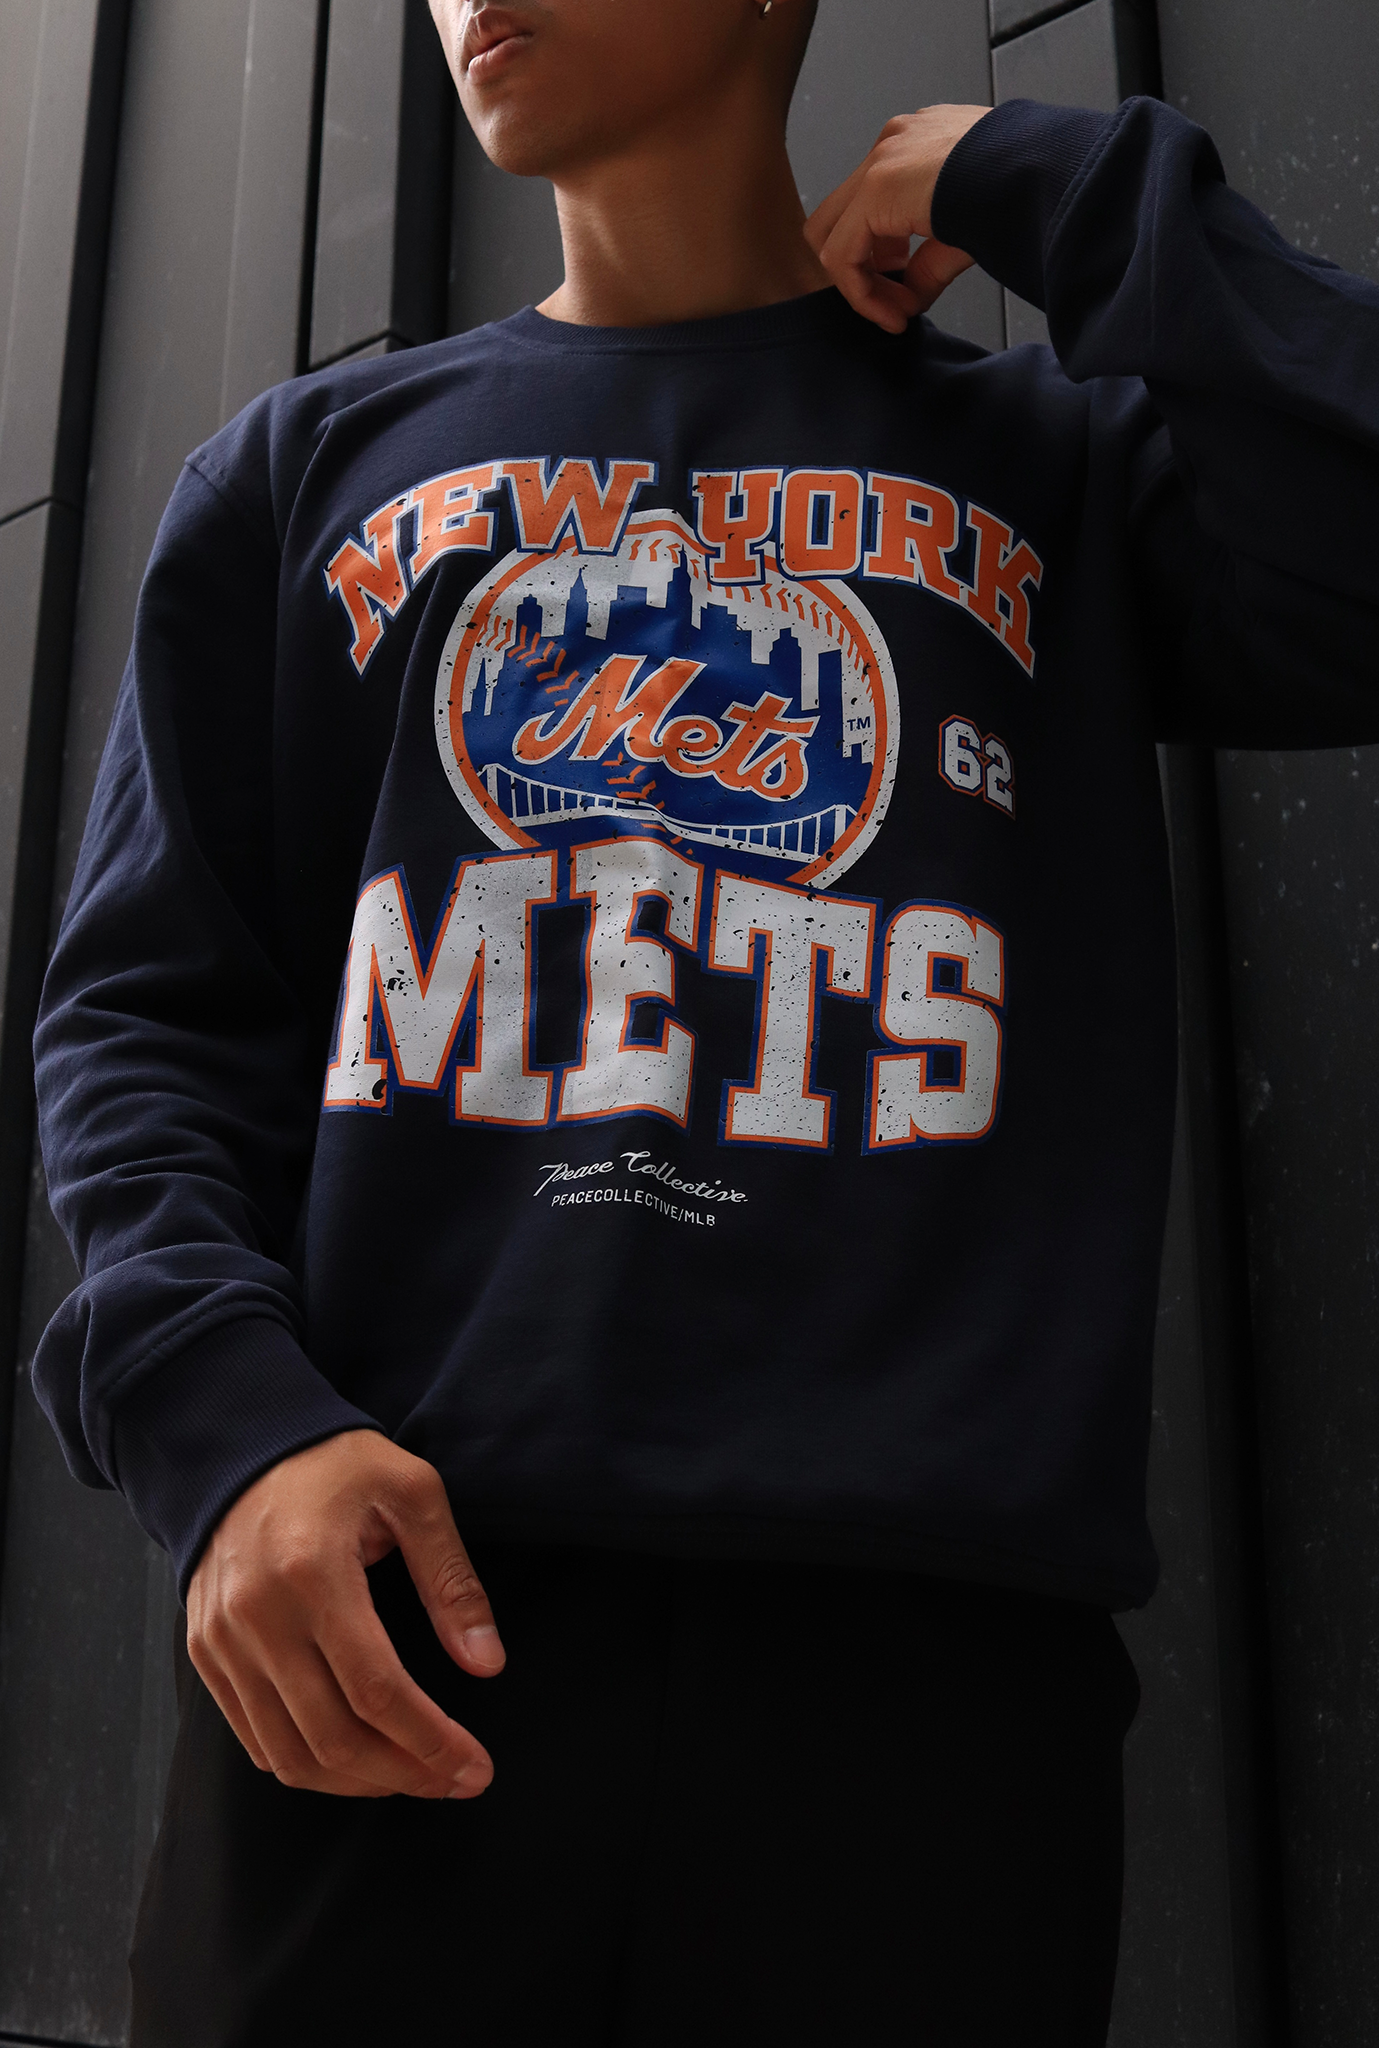 New York Mets Vintage Washed Crewneck - Navy